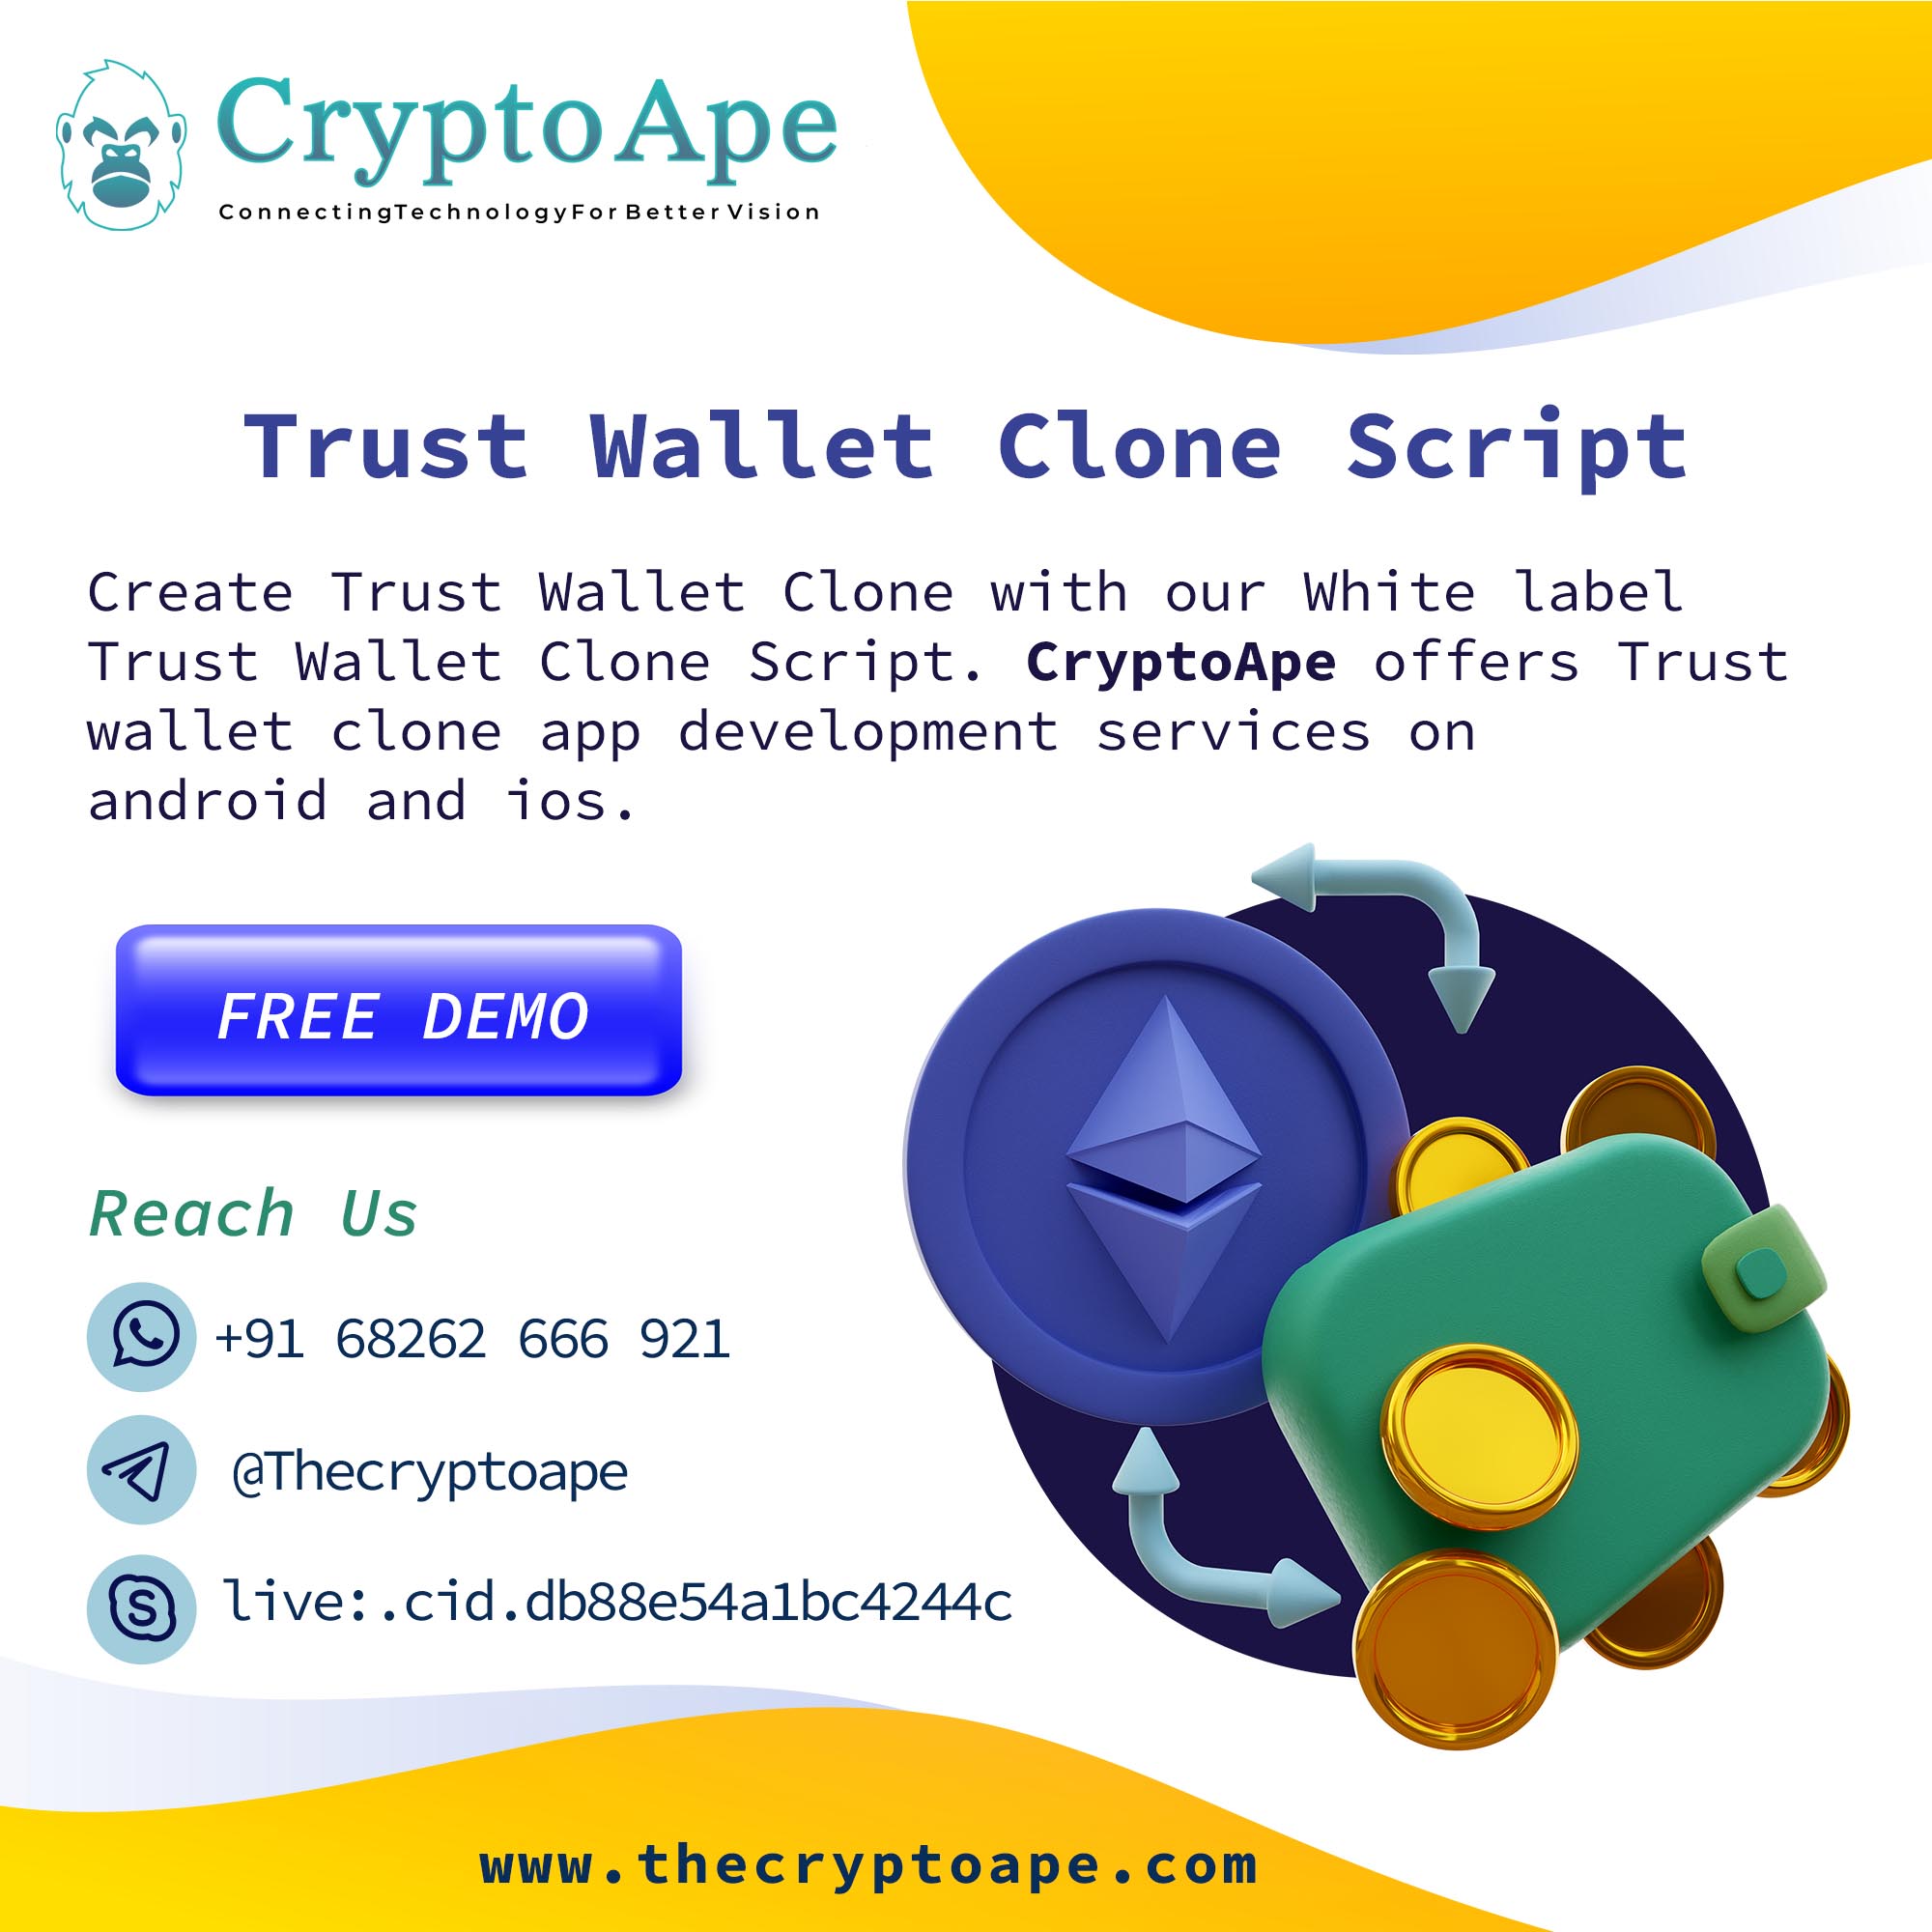 fag CryptoApe

LW) ctingTechnologyForBetter Vi

Trust Wallet Clone Script
Create Trust Wallet Clone with our White label
Trust Wallet Clone Script. CryptoApe offers Trust

wallet clone app development services on
android and ios.

Ee
FREE DEMO

Reach Us
(O +91 68262 666 921

&lt;4] @Thecryptoape

   

© live: .cid.db88e54albc4244c

www.thecryptoape.com